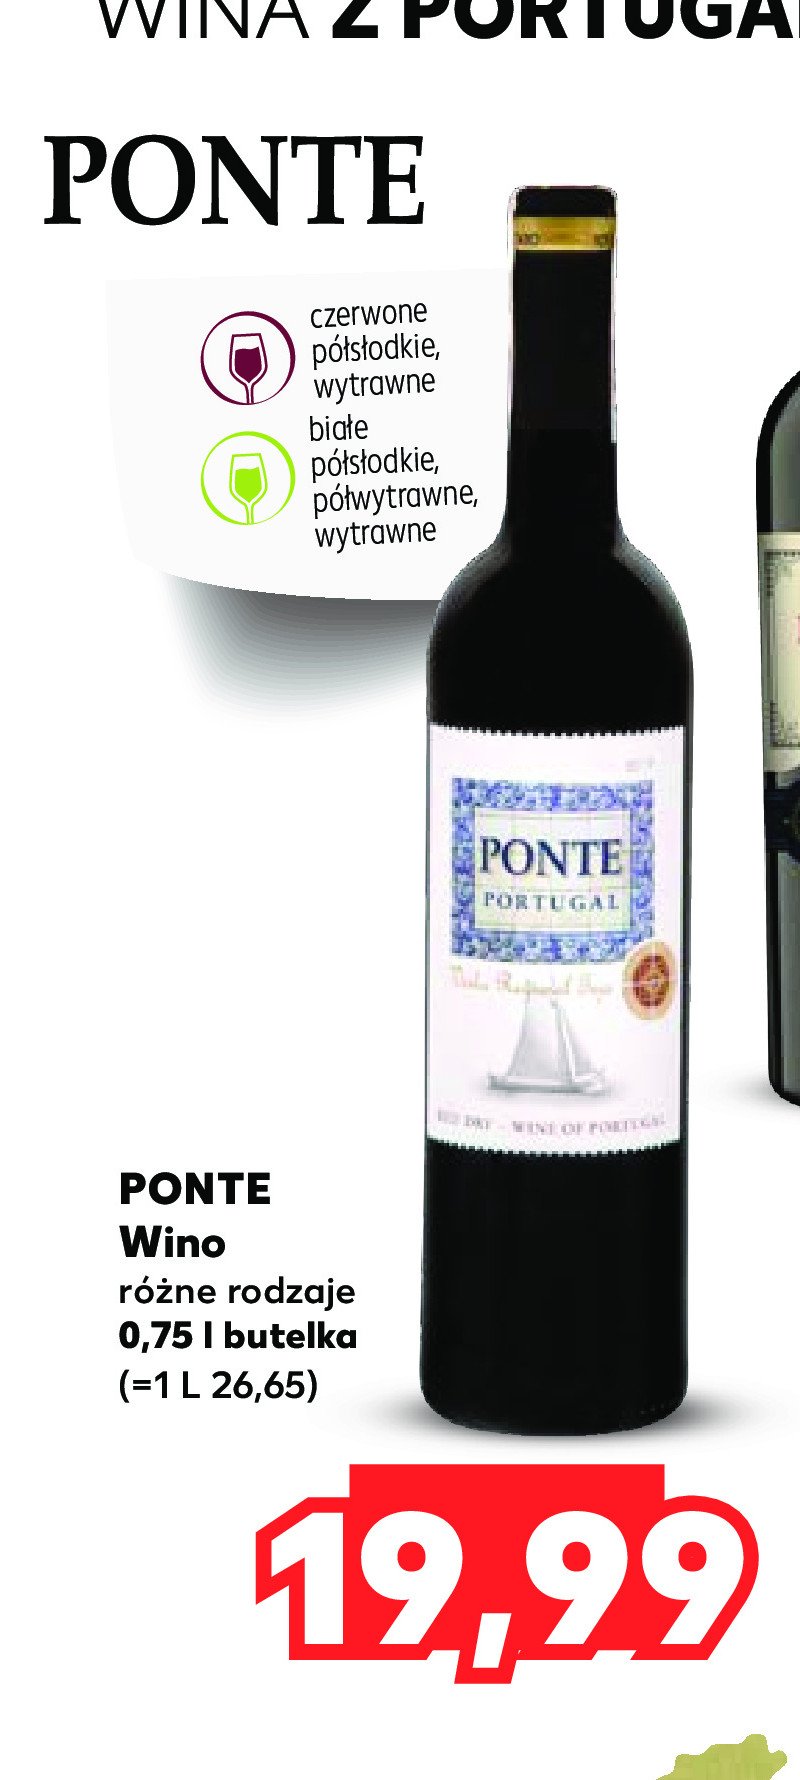 Wino karton PONTE PORTUGAL DRY promocja